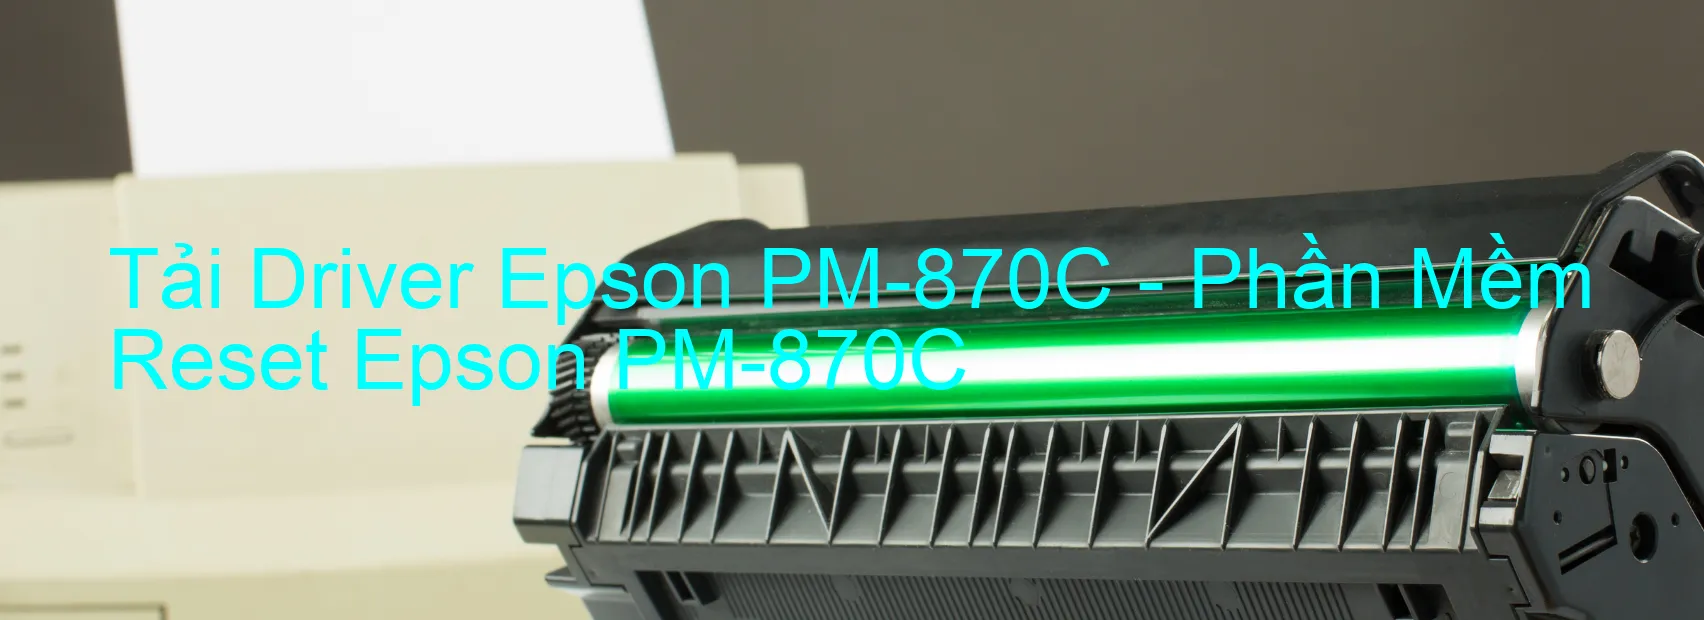 Driver Epson PM-870C, Phần Mềm Reset Epson PM-870C